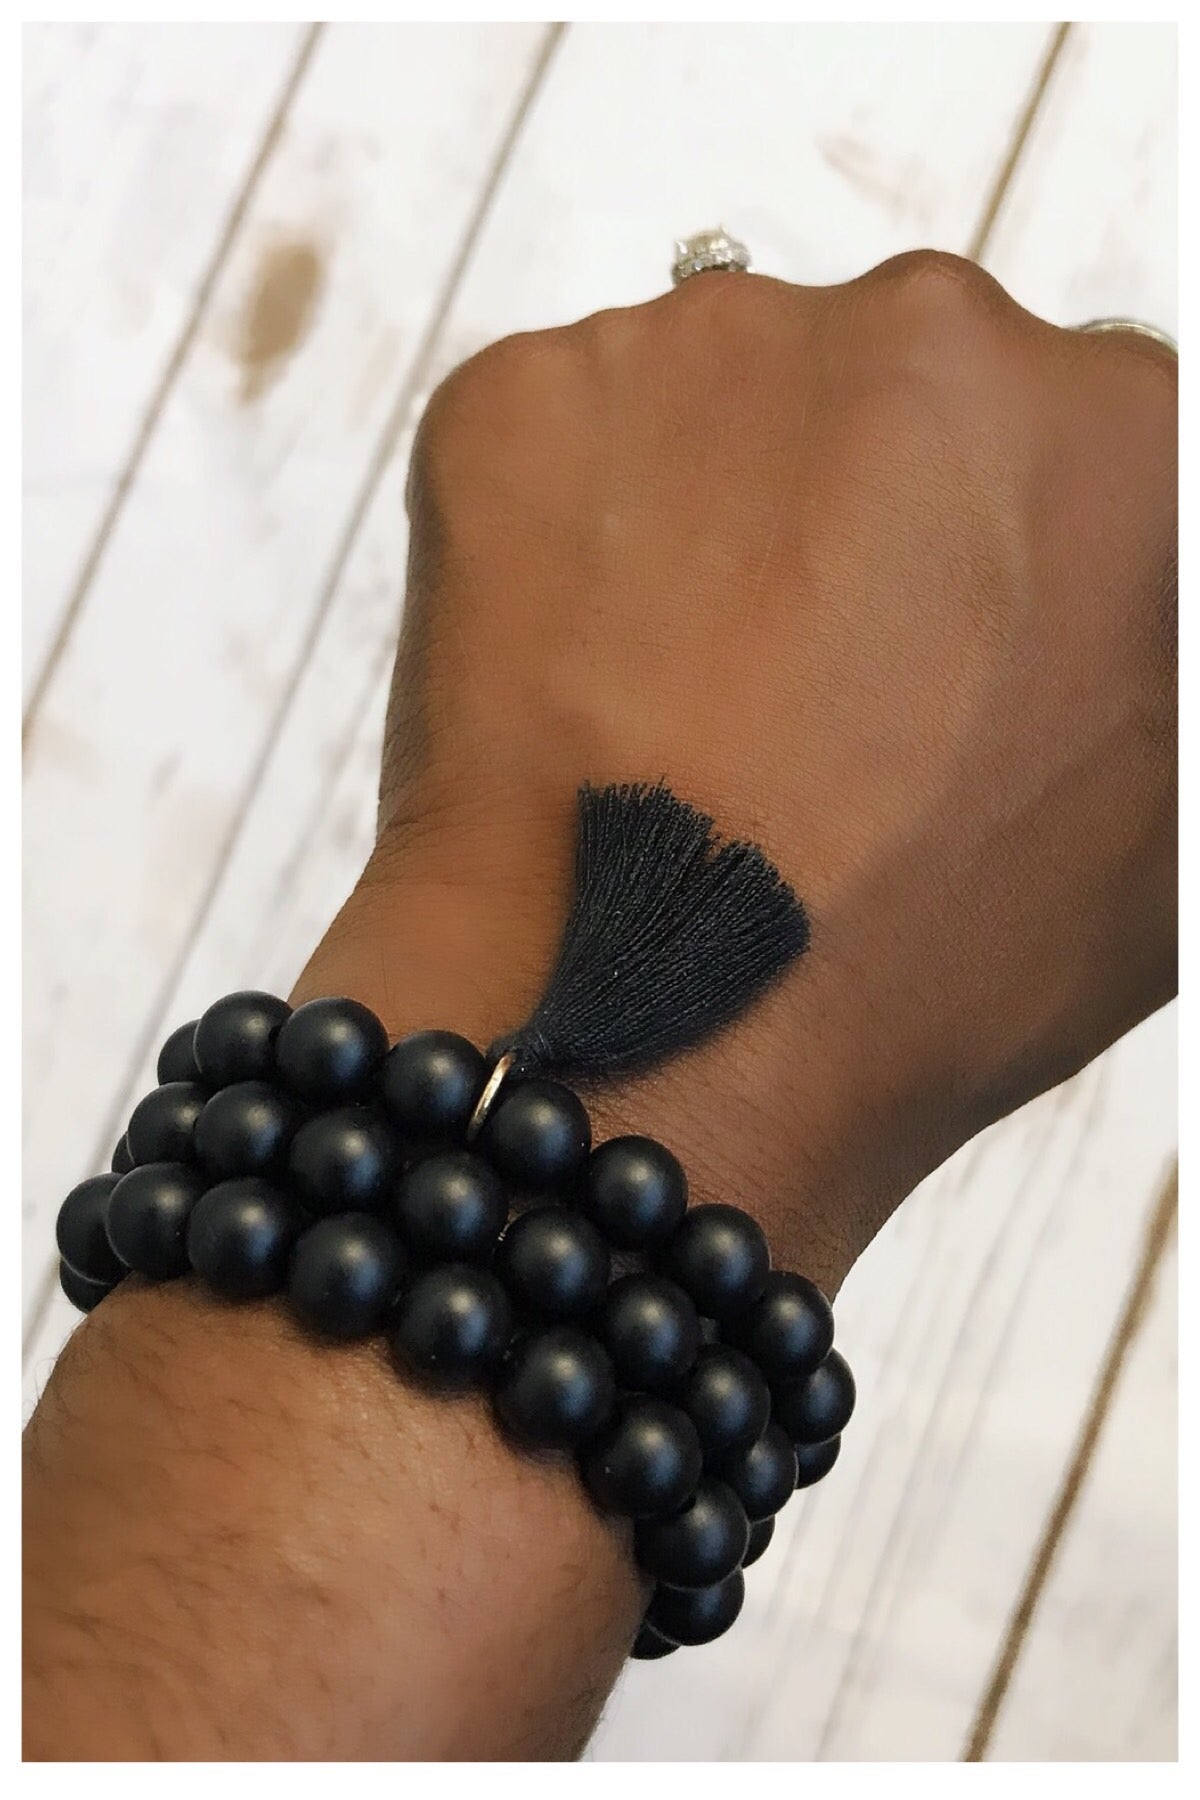 Luna Llena Bead Bracelets - Black Onyx